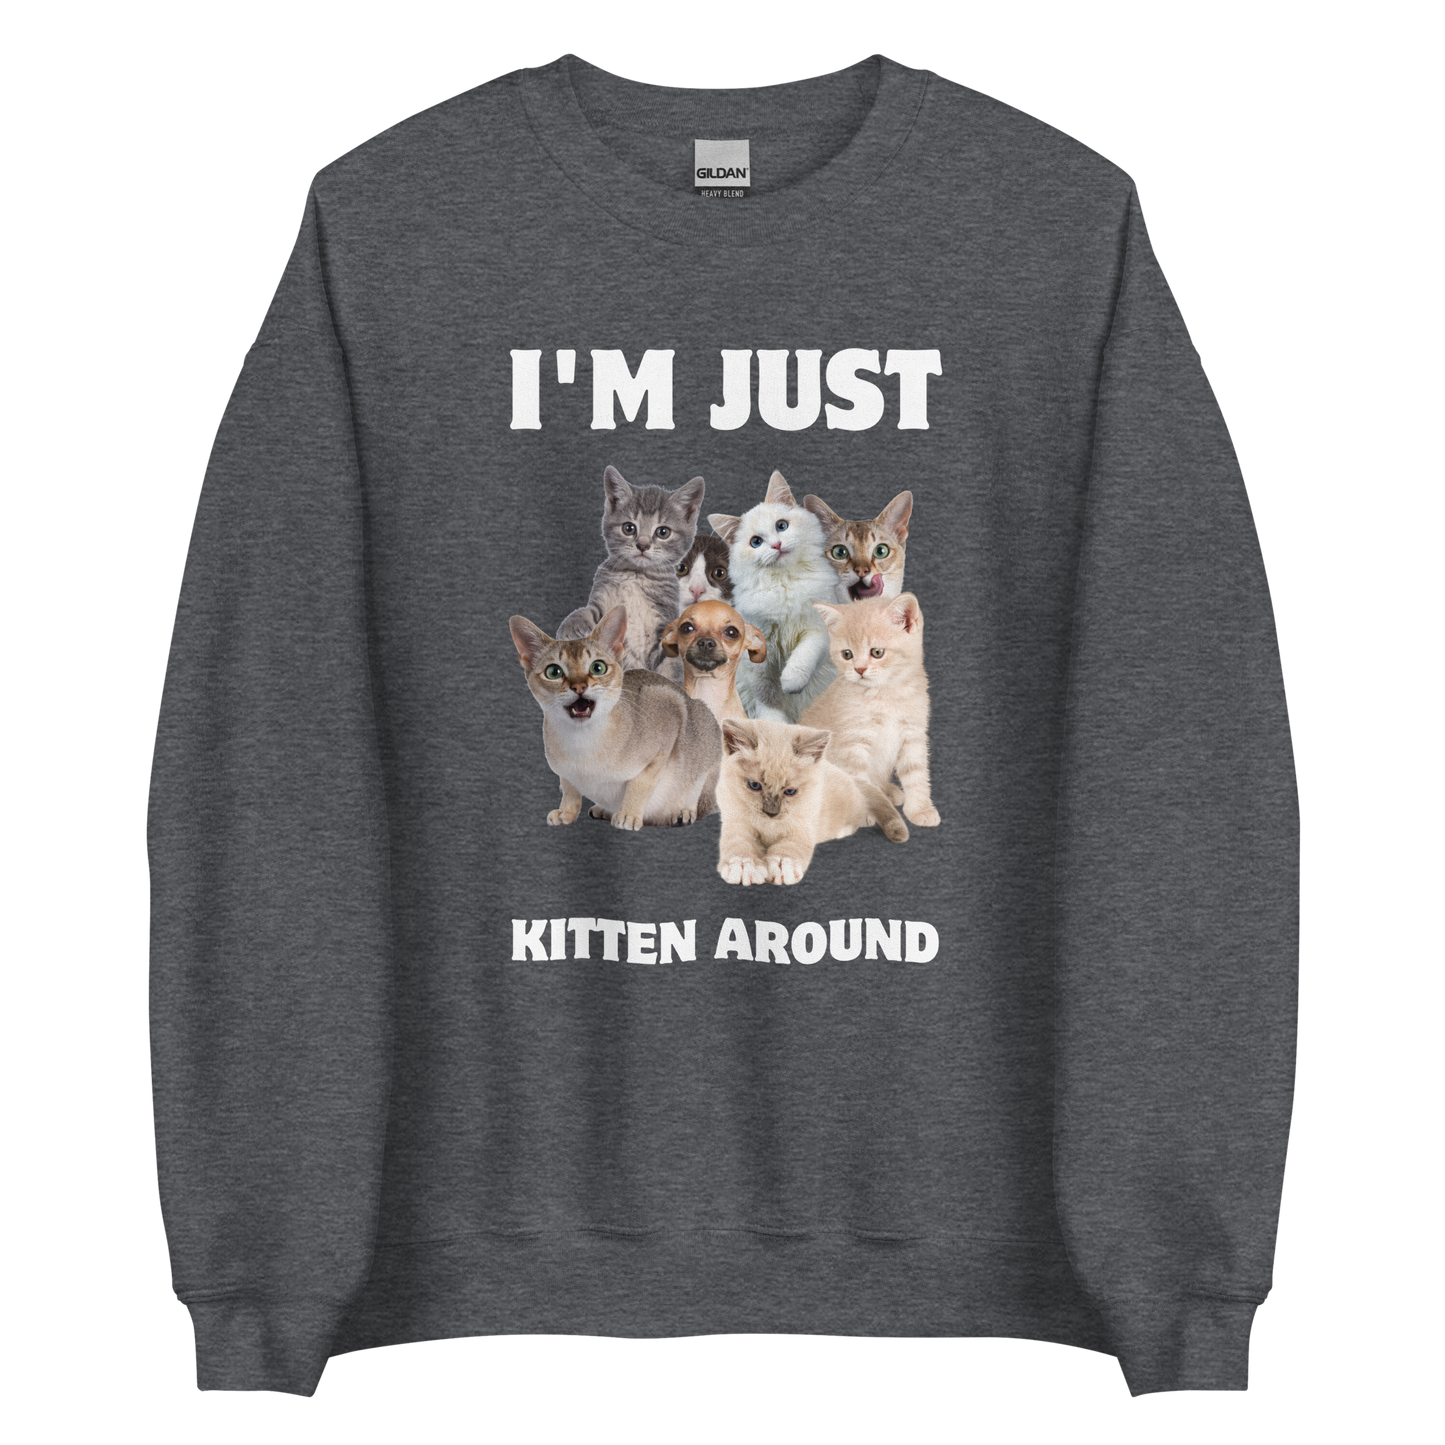 Dark Heather Cat Sweatshirt featuring an I'm Just Kitten Around graphic on the chest - Funny Graphic Cat Sweatshirts - Boozy Fox